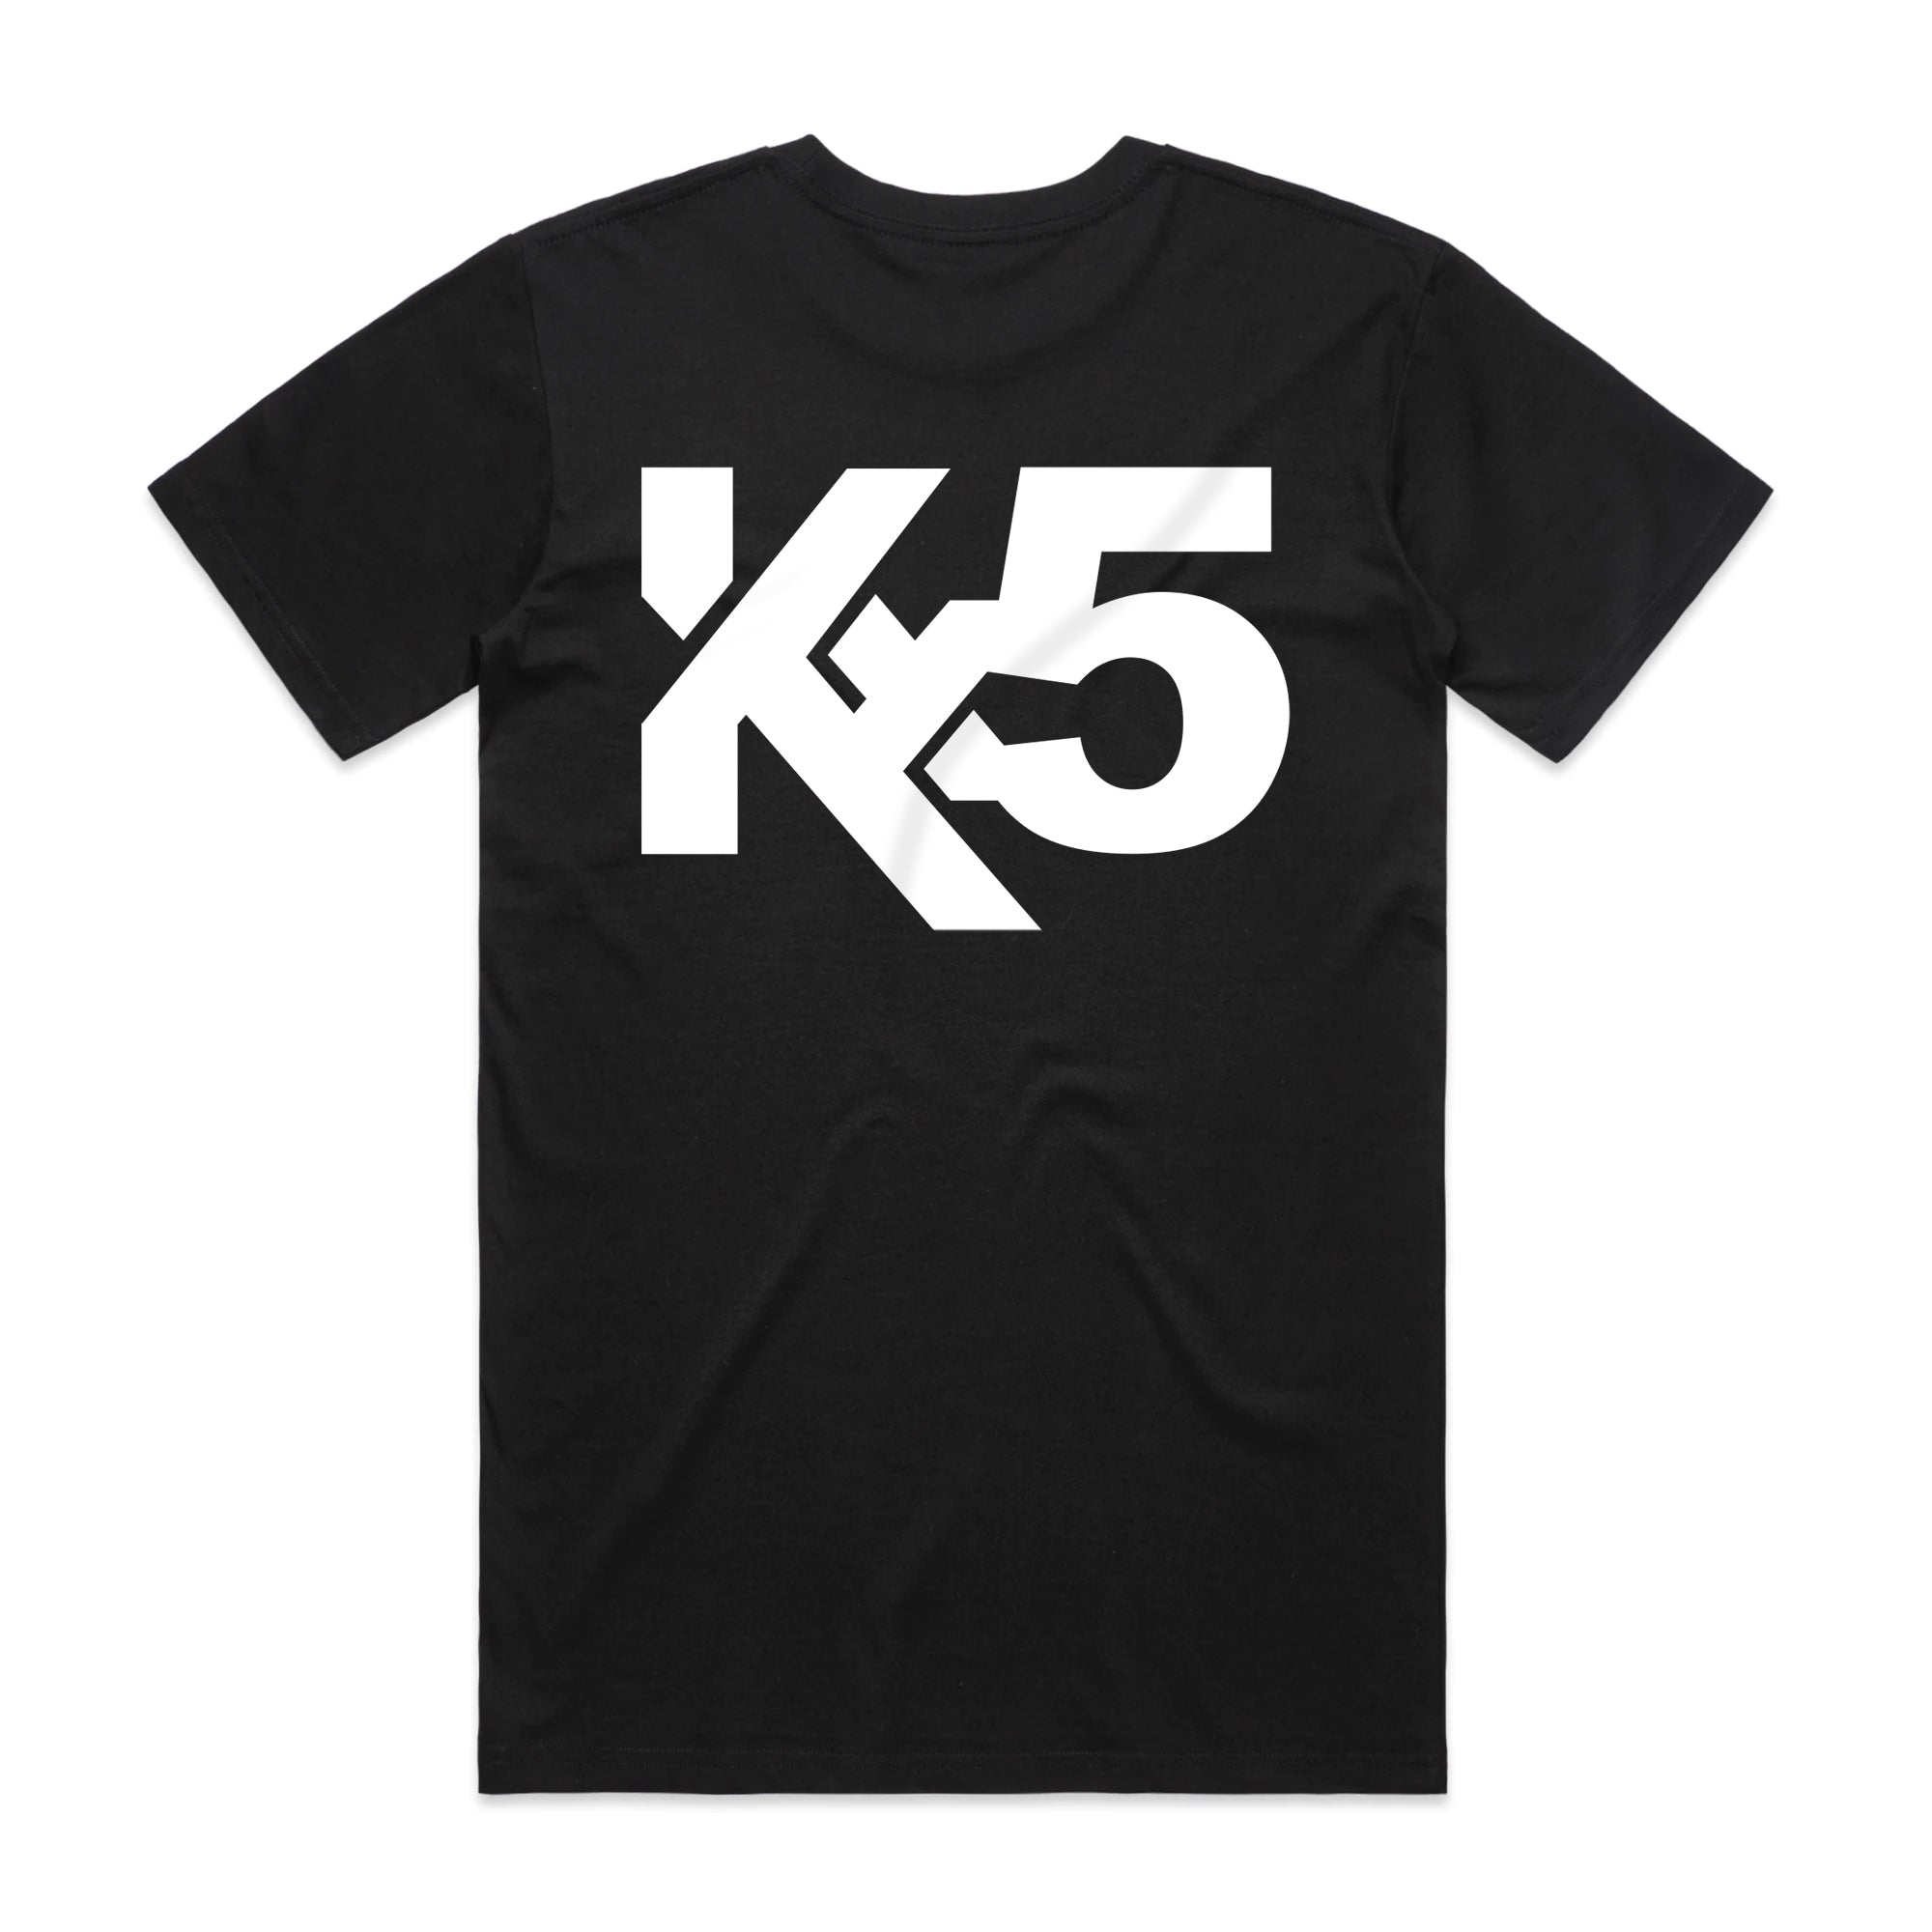 Classic Logo Tee – Kx5 Shop